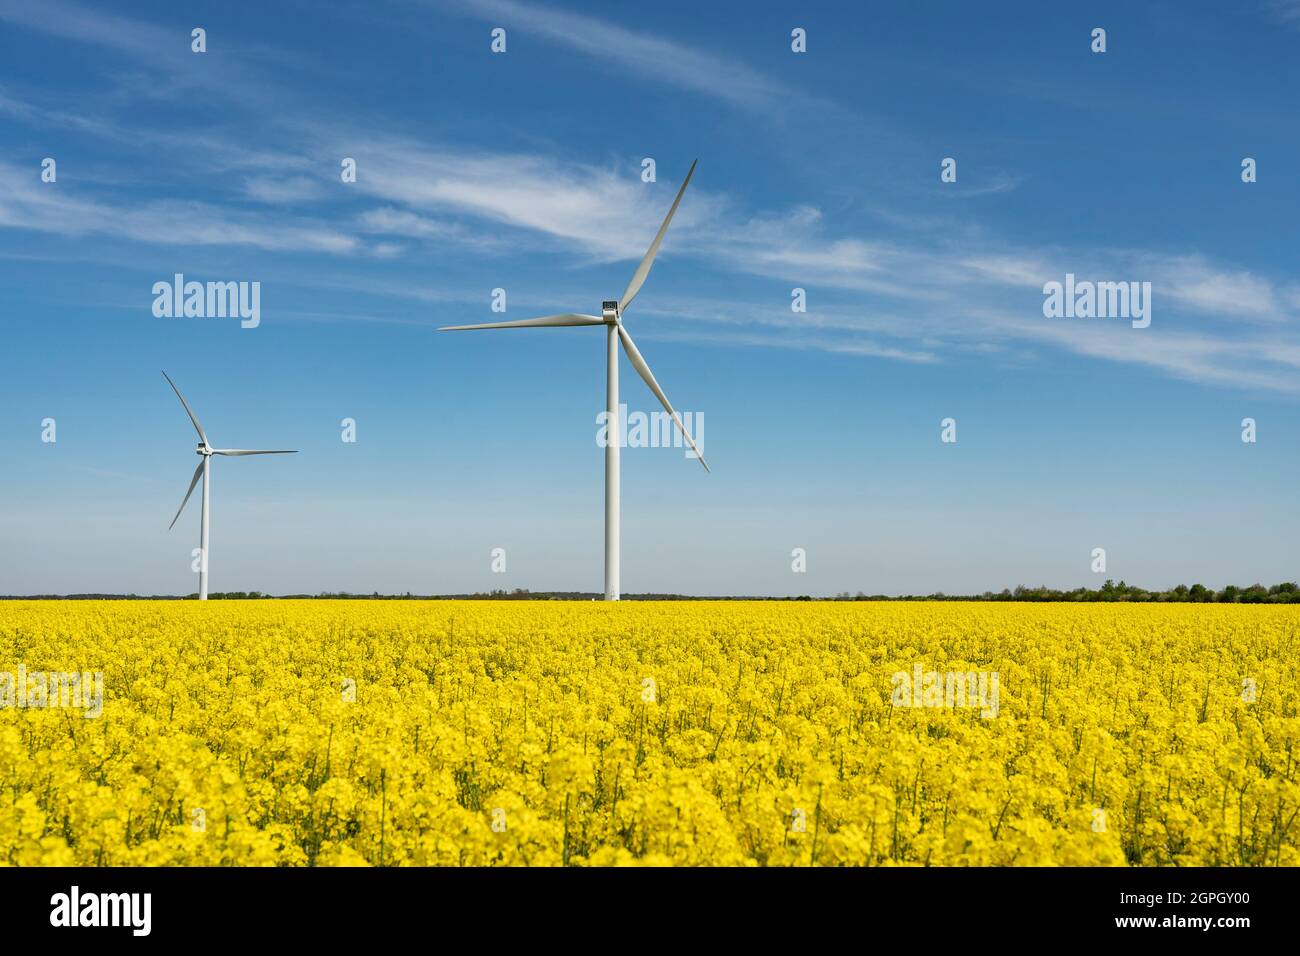 France, Eure et Loir, Allainville, wind farm, rapeseed field Stock Photo